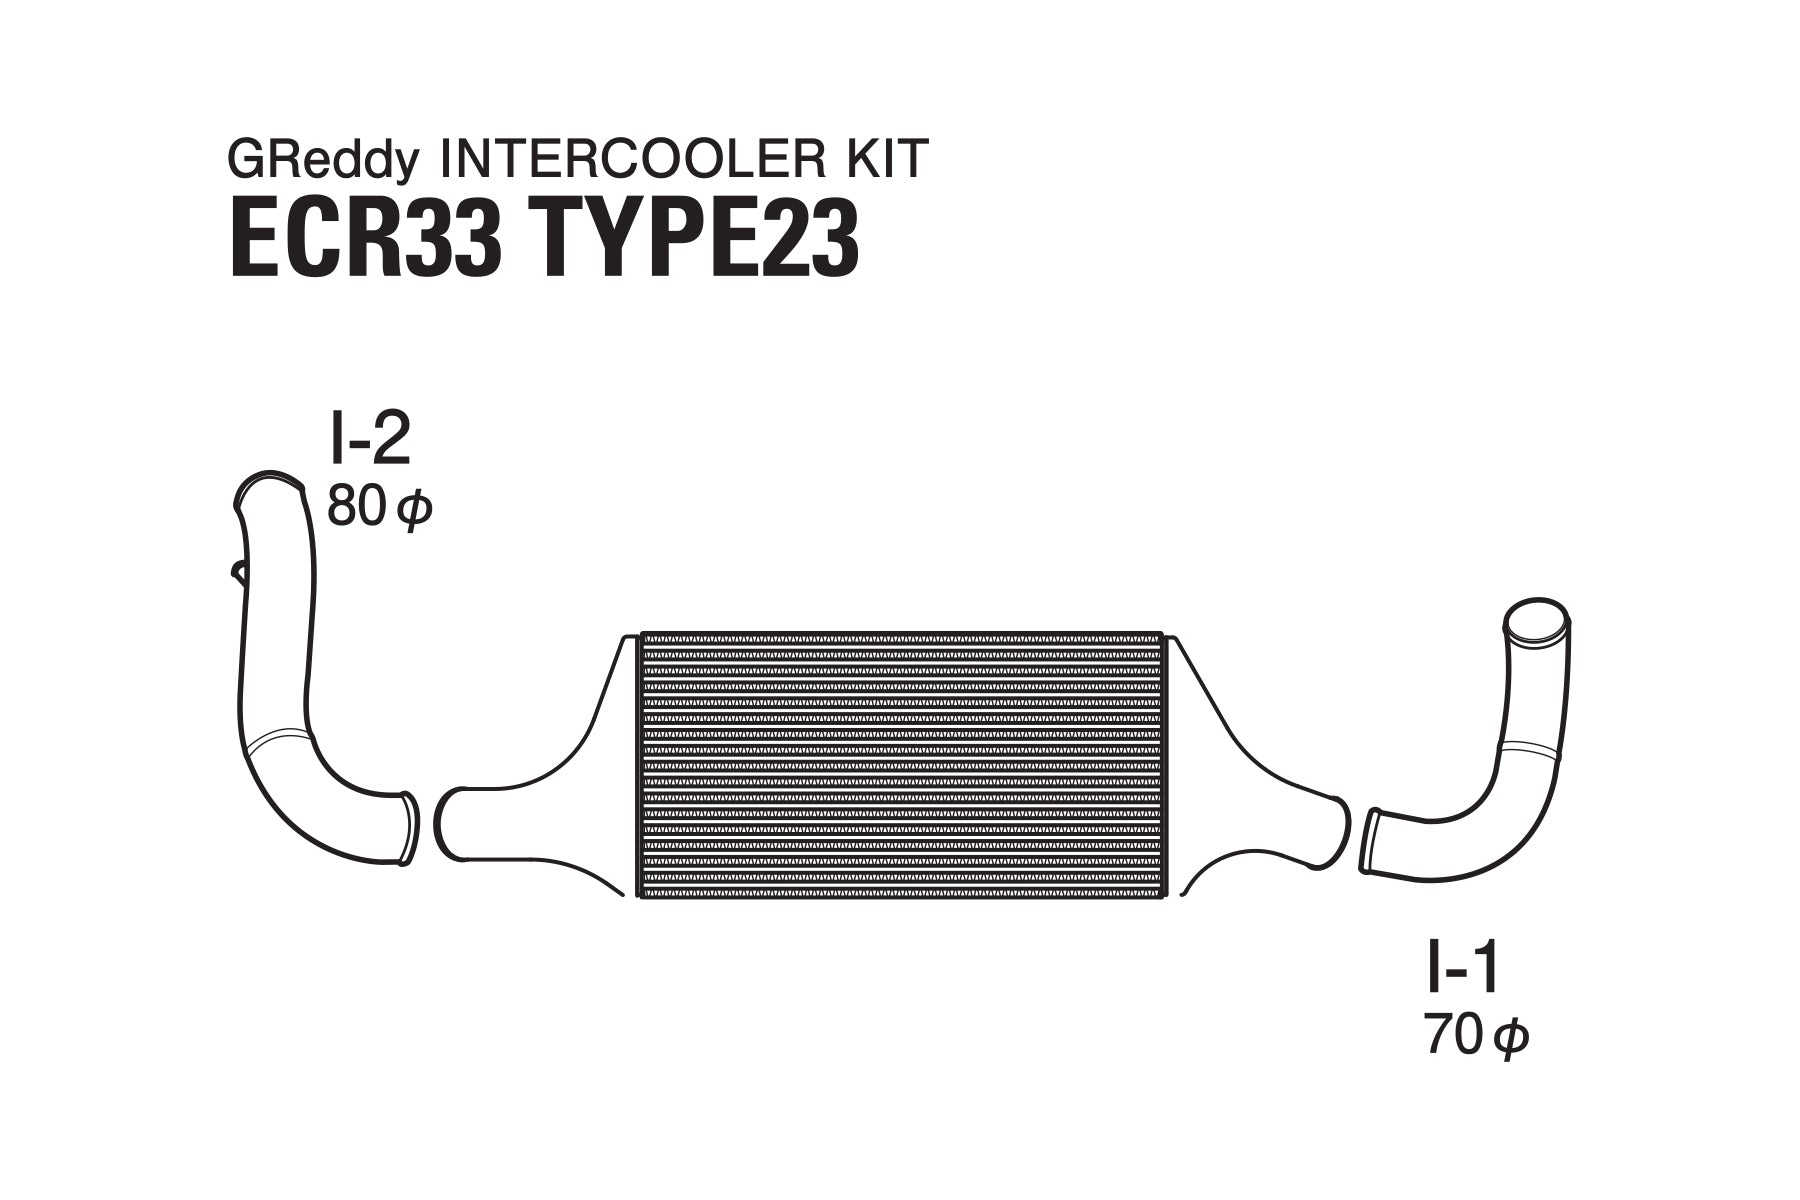 GREDDY INTERCOOLER KIT T-23F ECR33 - (12020206)